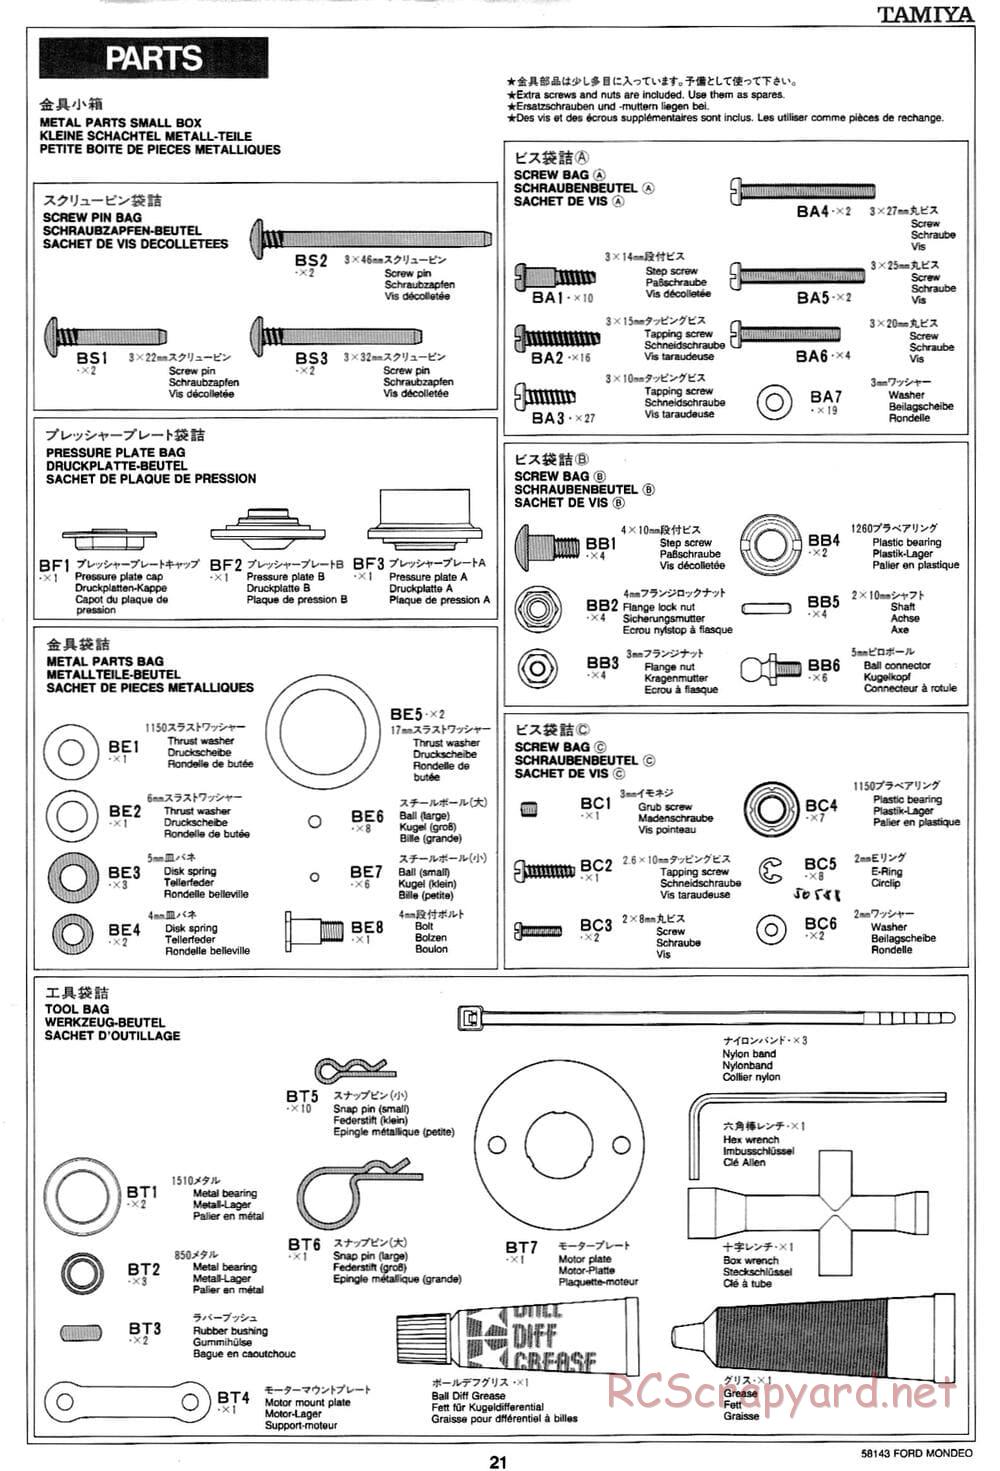 Tamiya - Ford Mondeo BTCC - FF-01 Chassis - Manual - Page 21